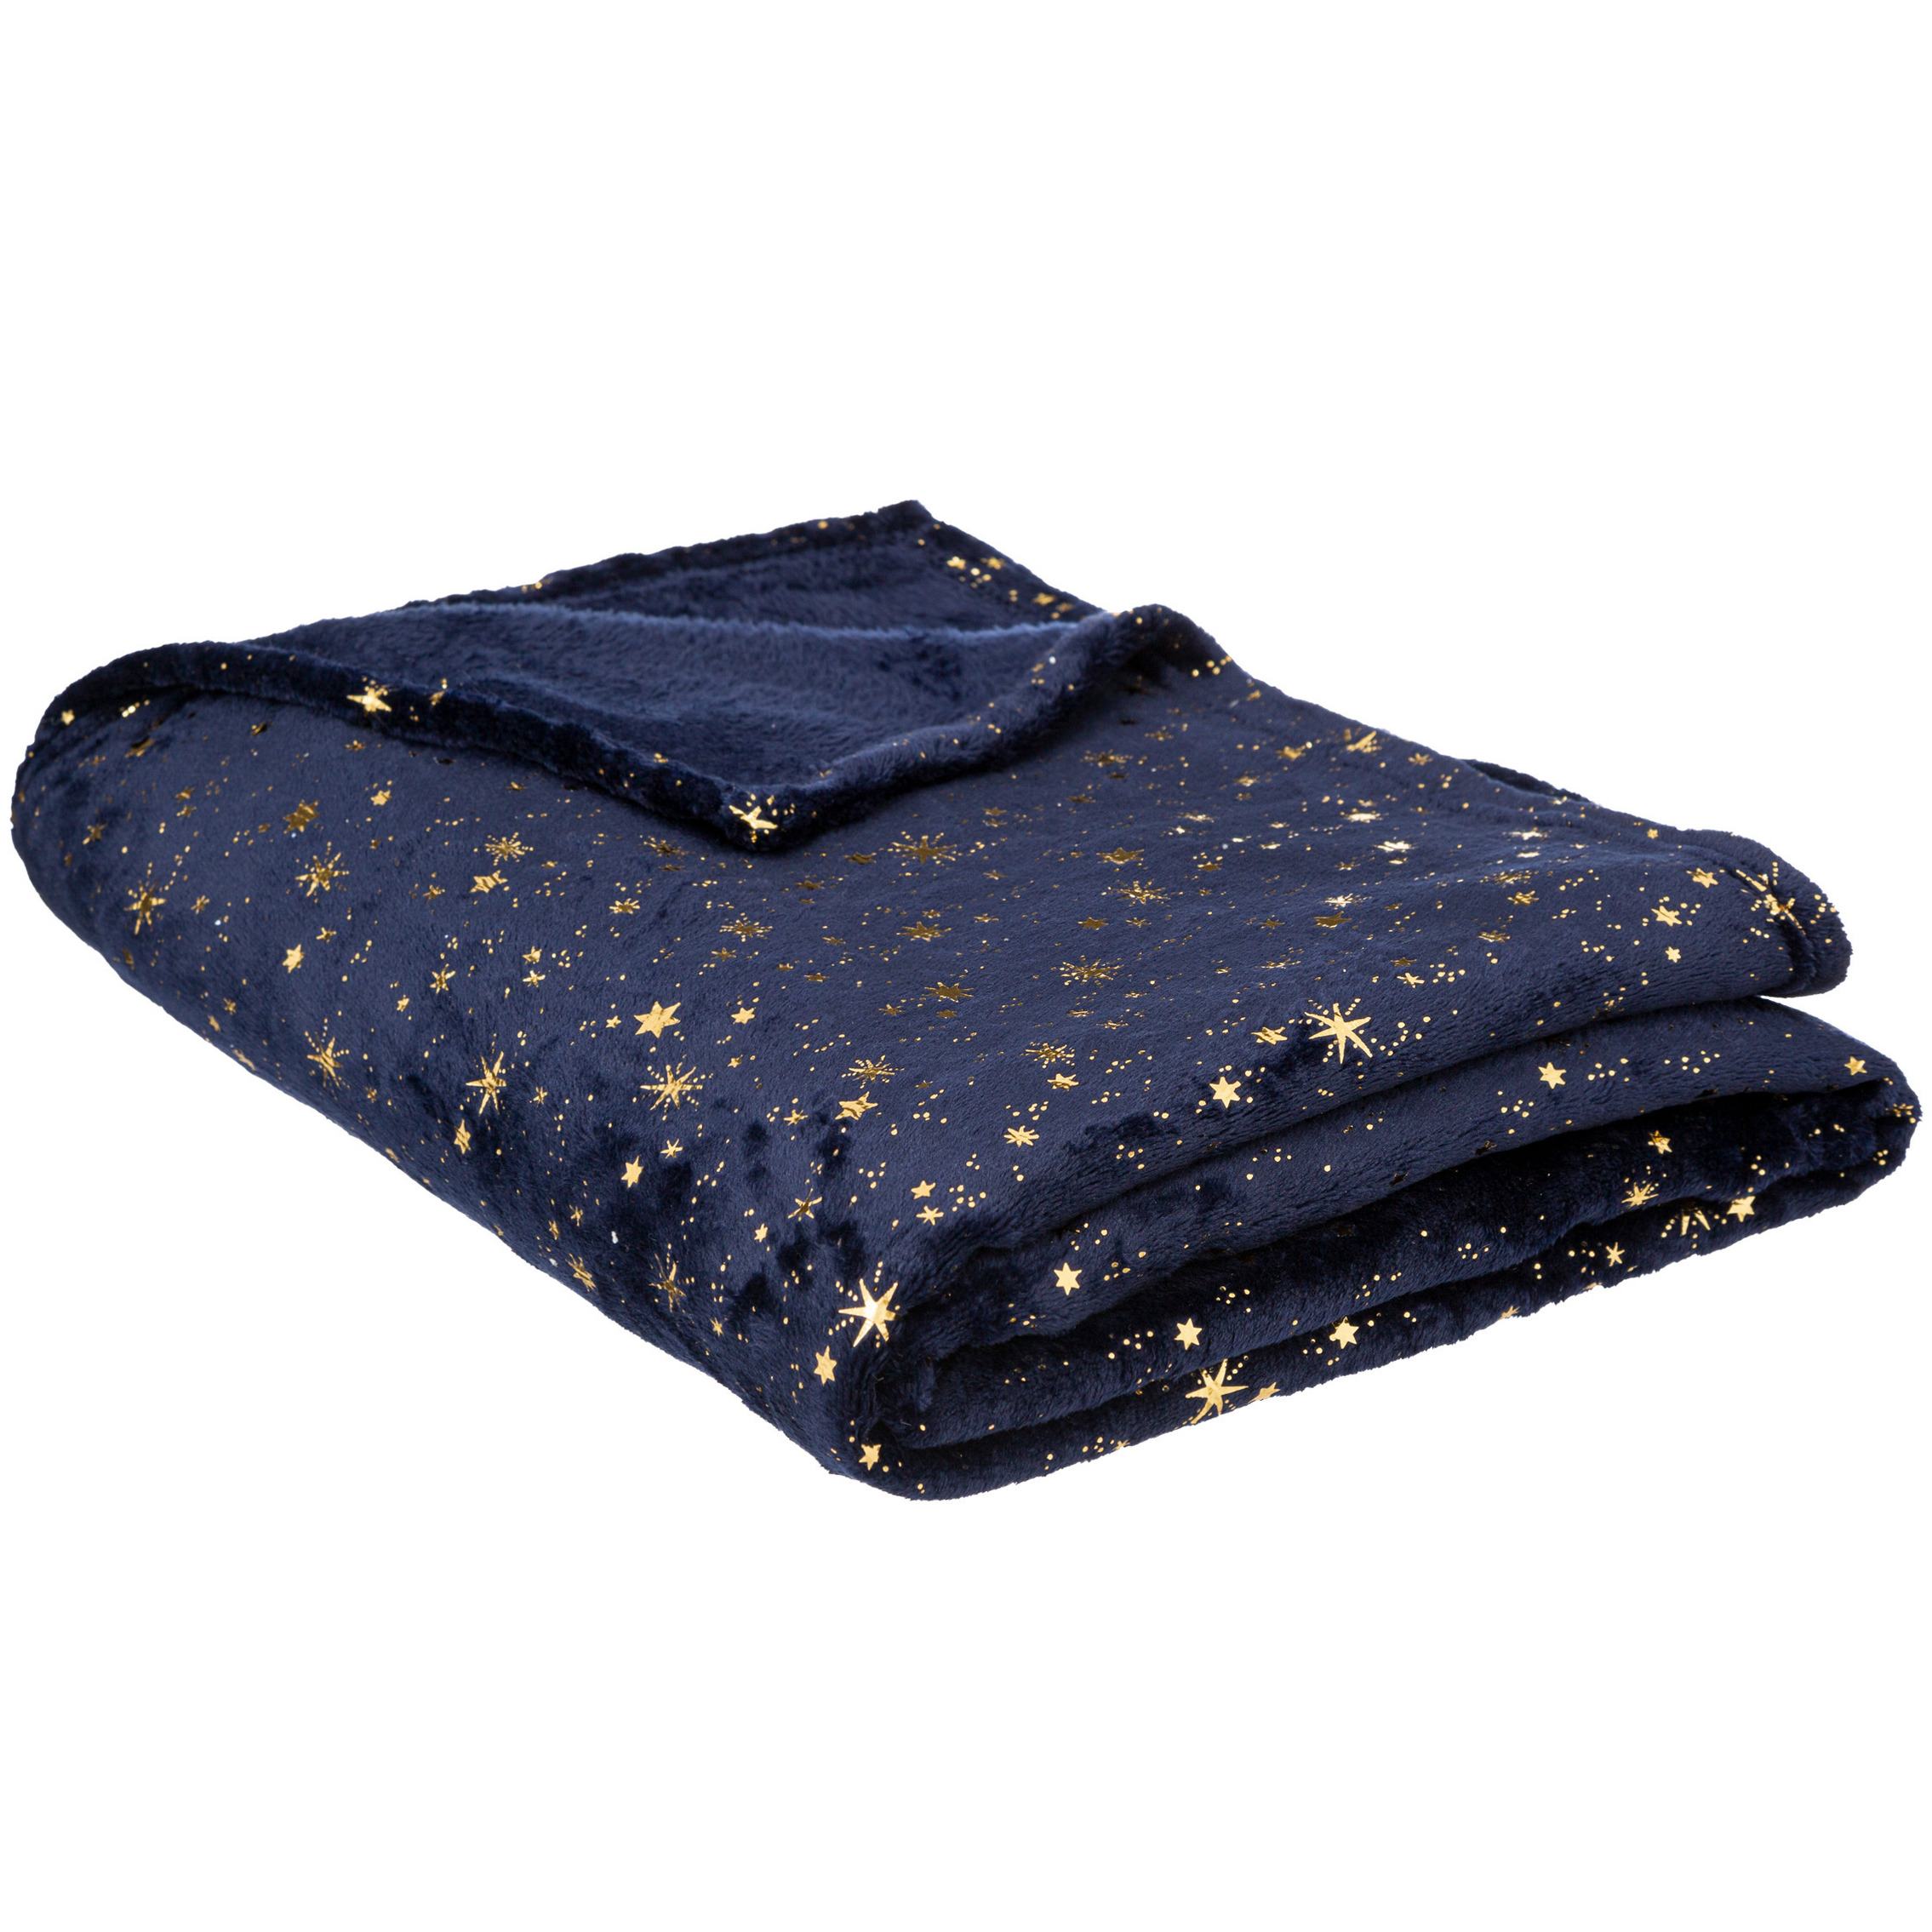 Feeric lights & Christmas Bank/bed sprei/deken/plaid - sterren 130 x 180 cm - blauw/goud -